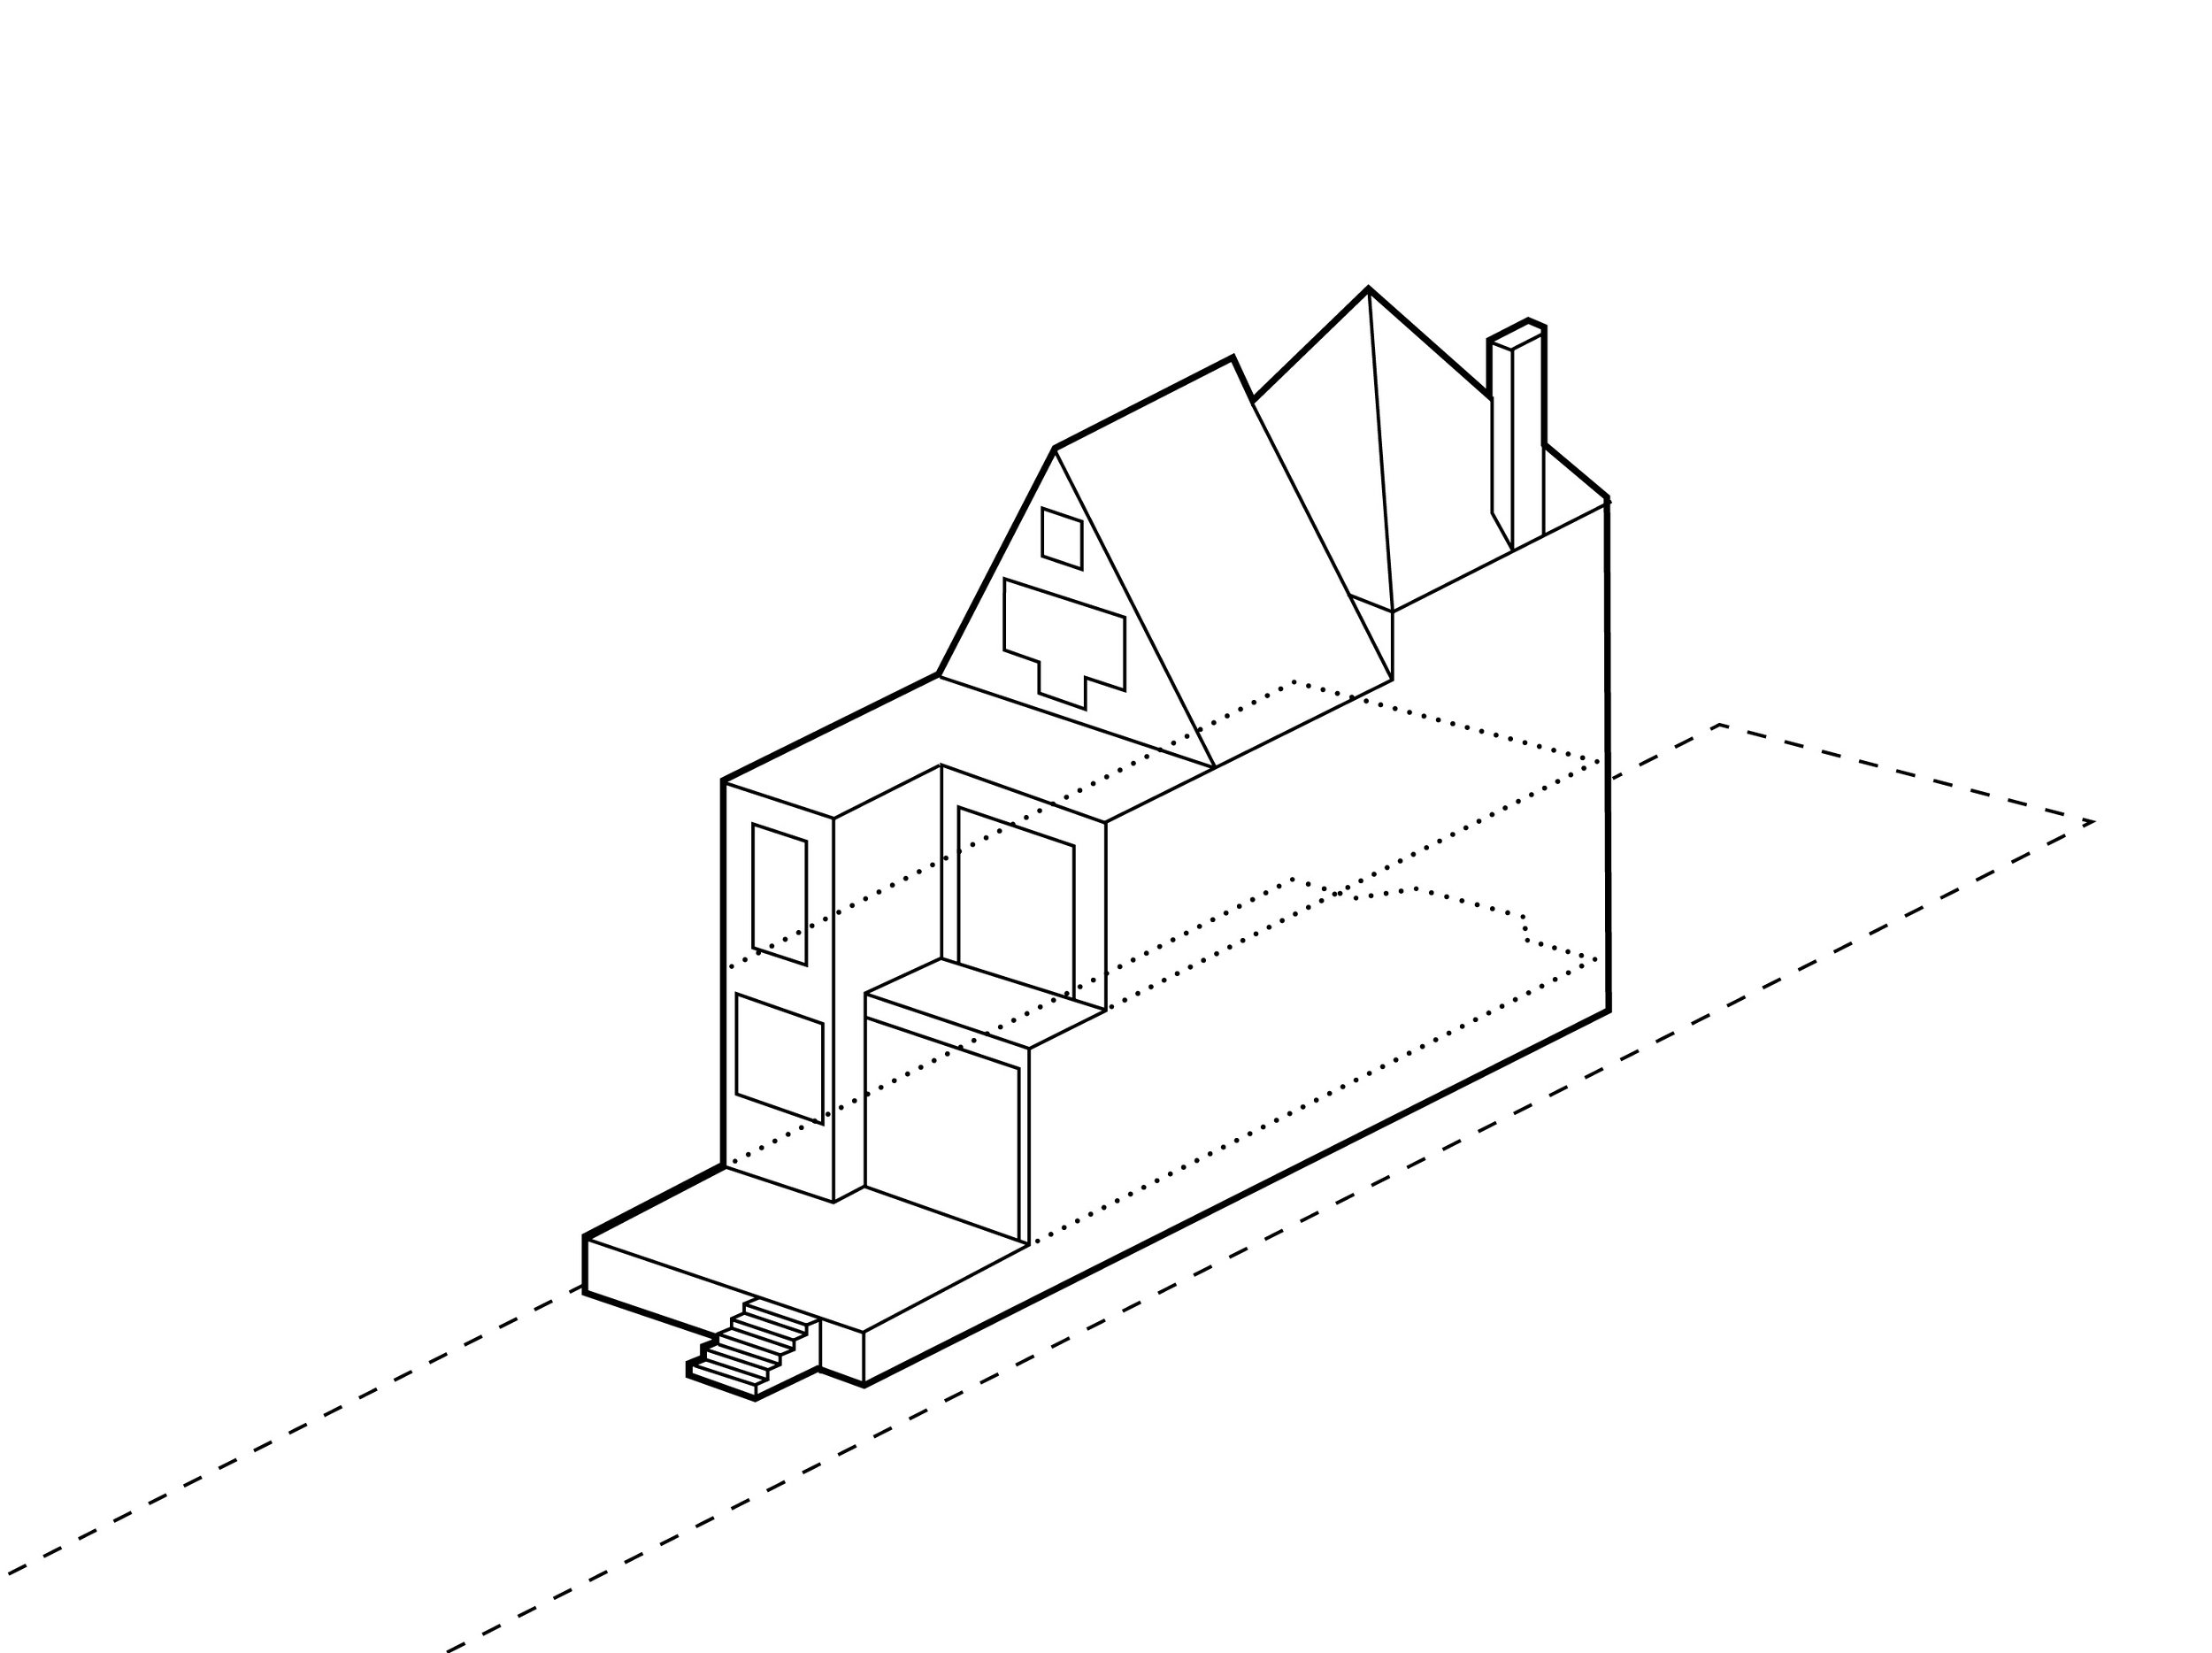 Personal-Architecture-rotterdam-woonhuis7-1.jpg